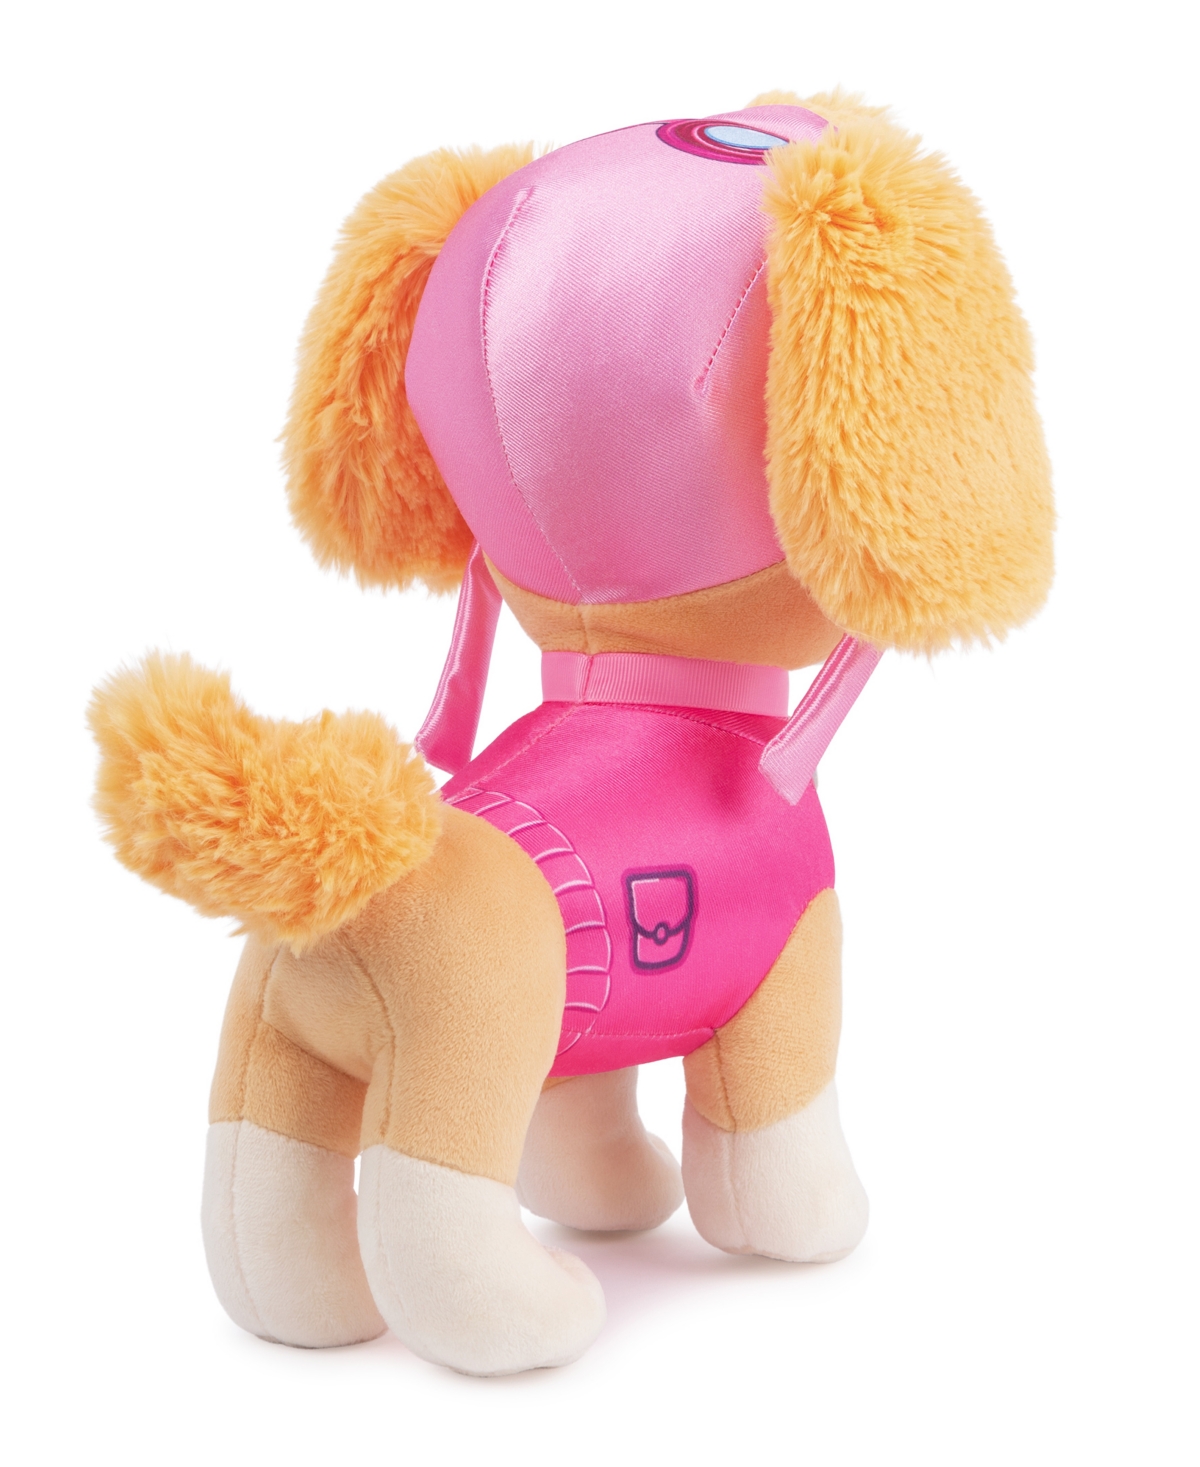 Shop Paw Patrol Skye In Heroic Standing Position Premium Stuffed Animal Plush Toy In Multi-color